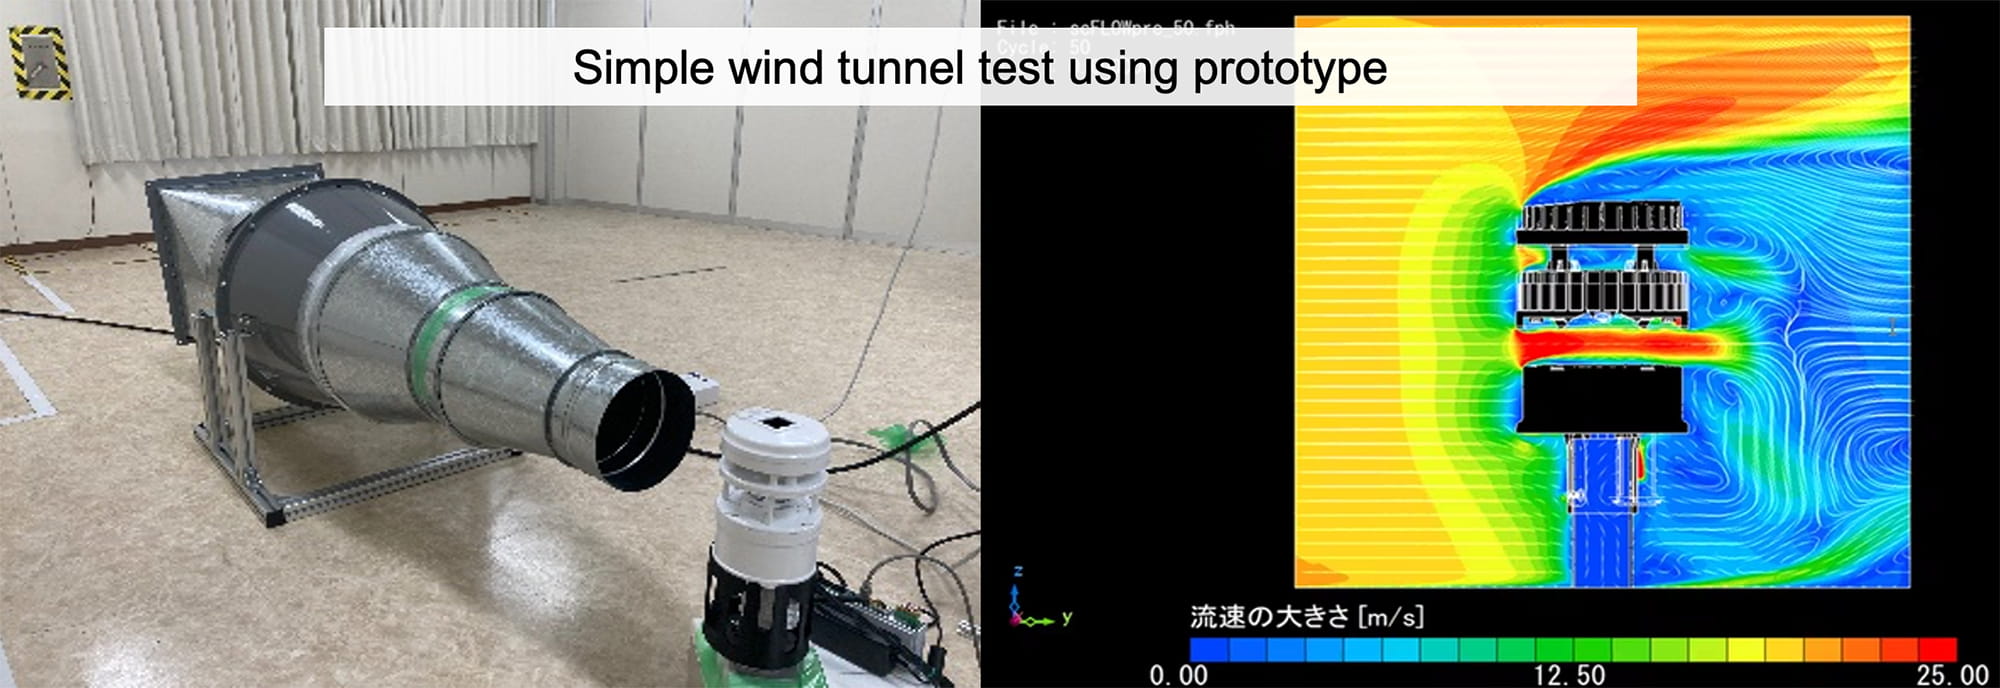 Simple wind tunnel test using prototype